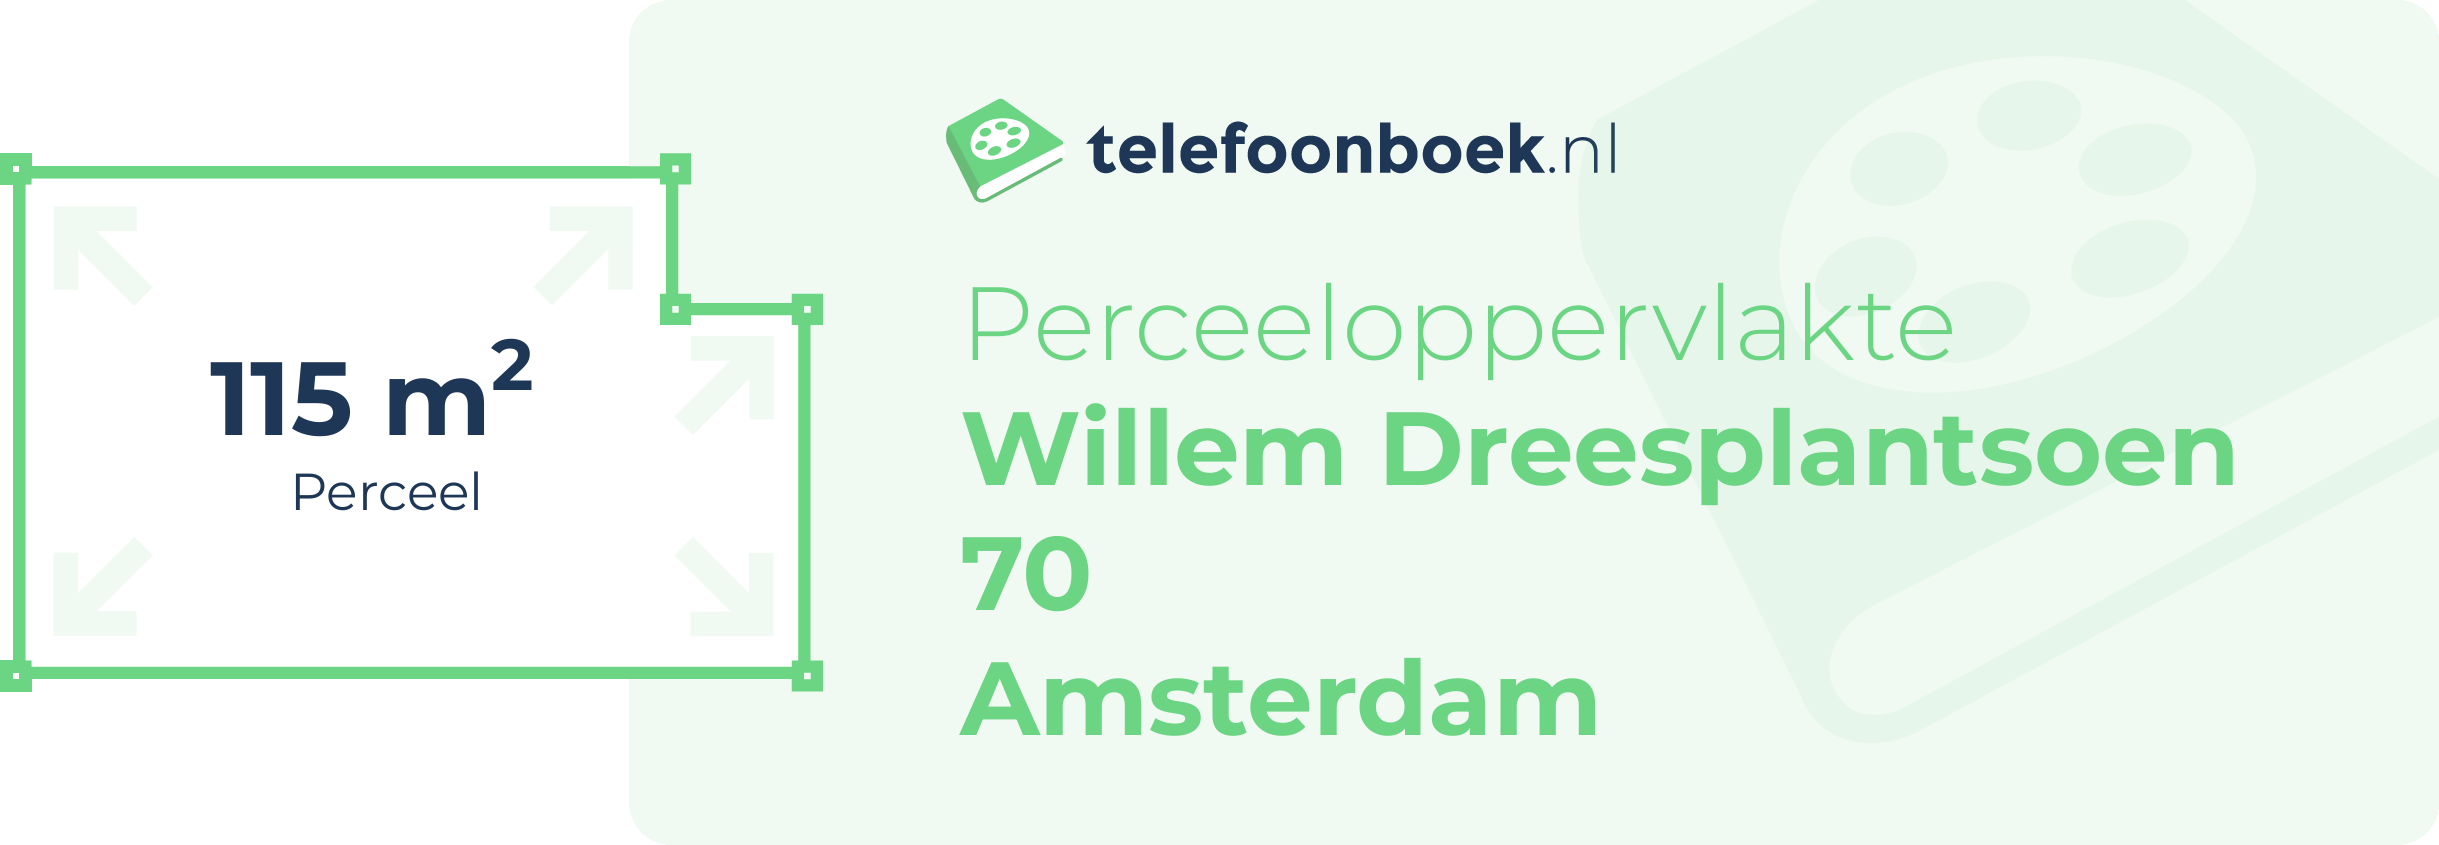 Perceeloppervlakte Willem Dreesplantsoen 70 Amsterdam